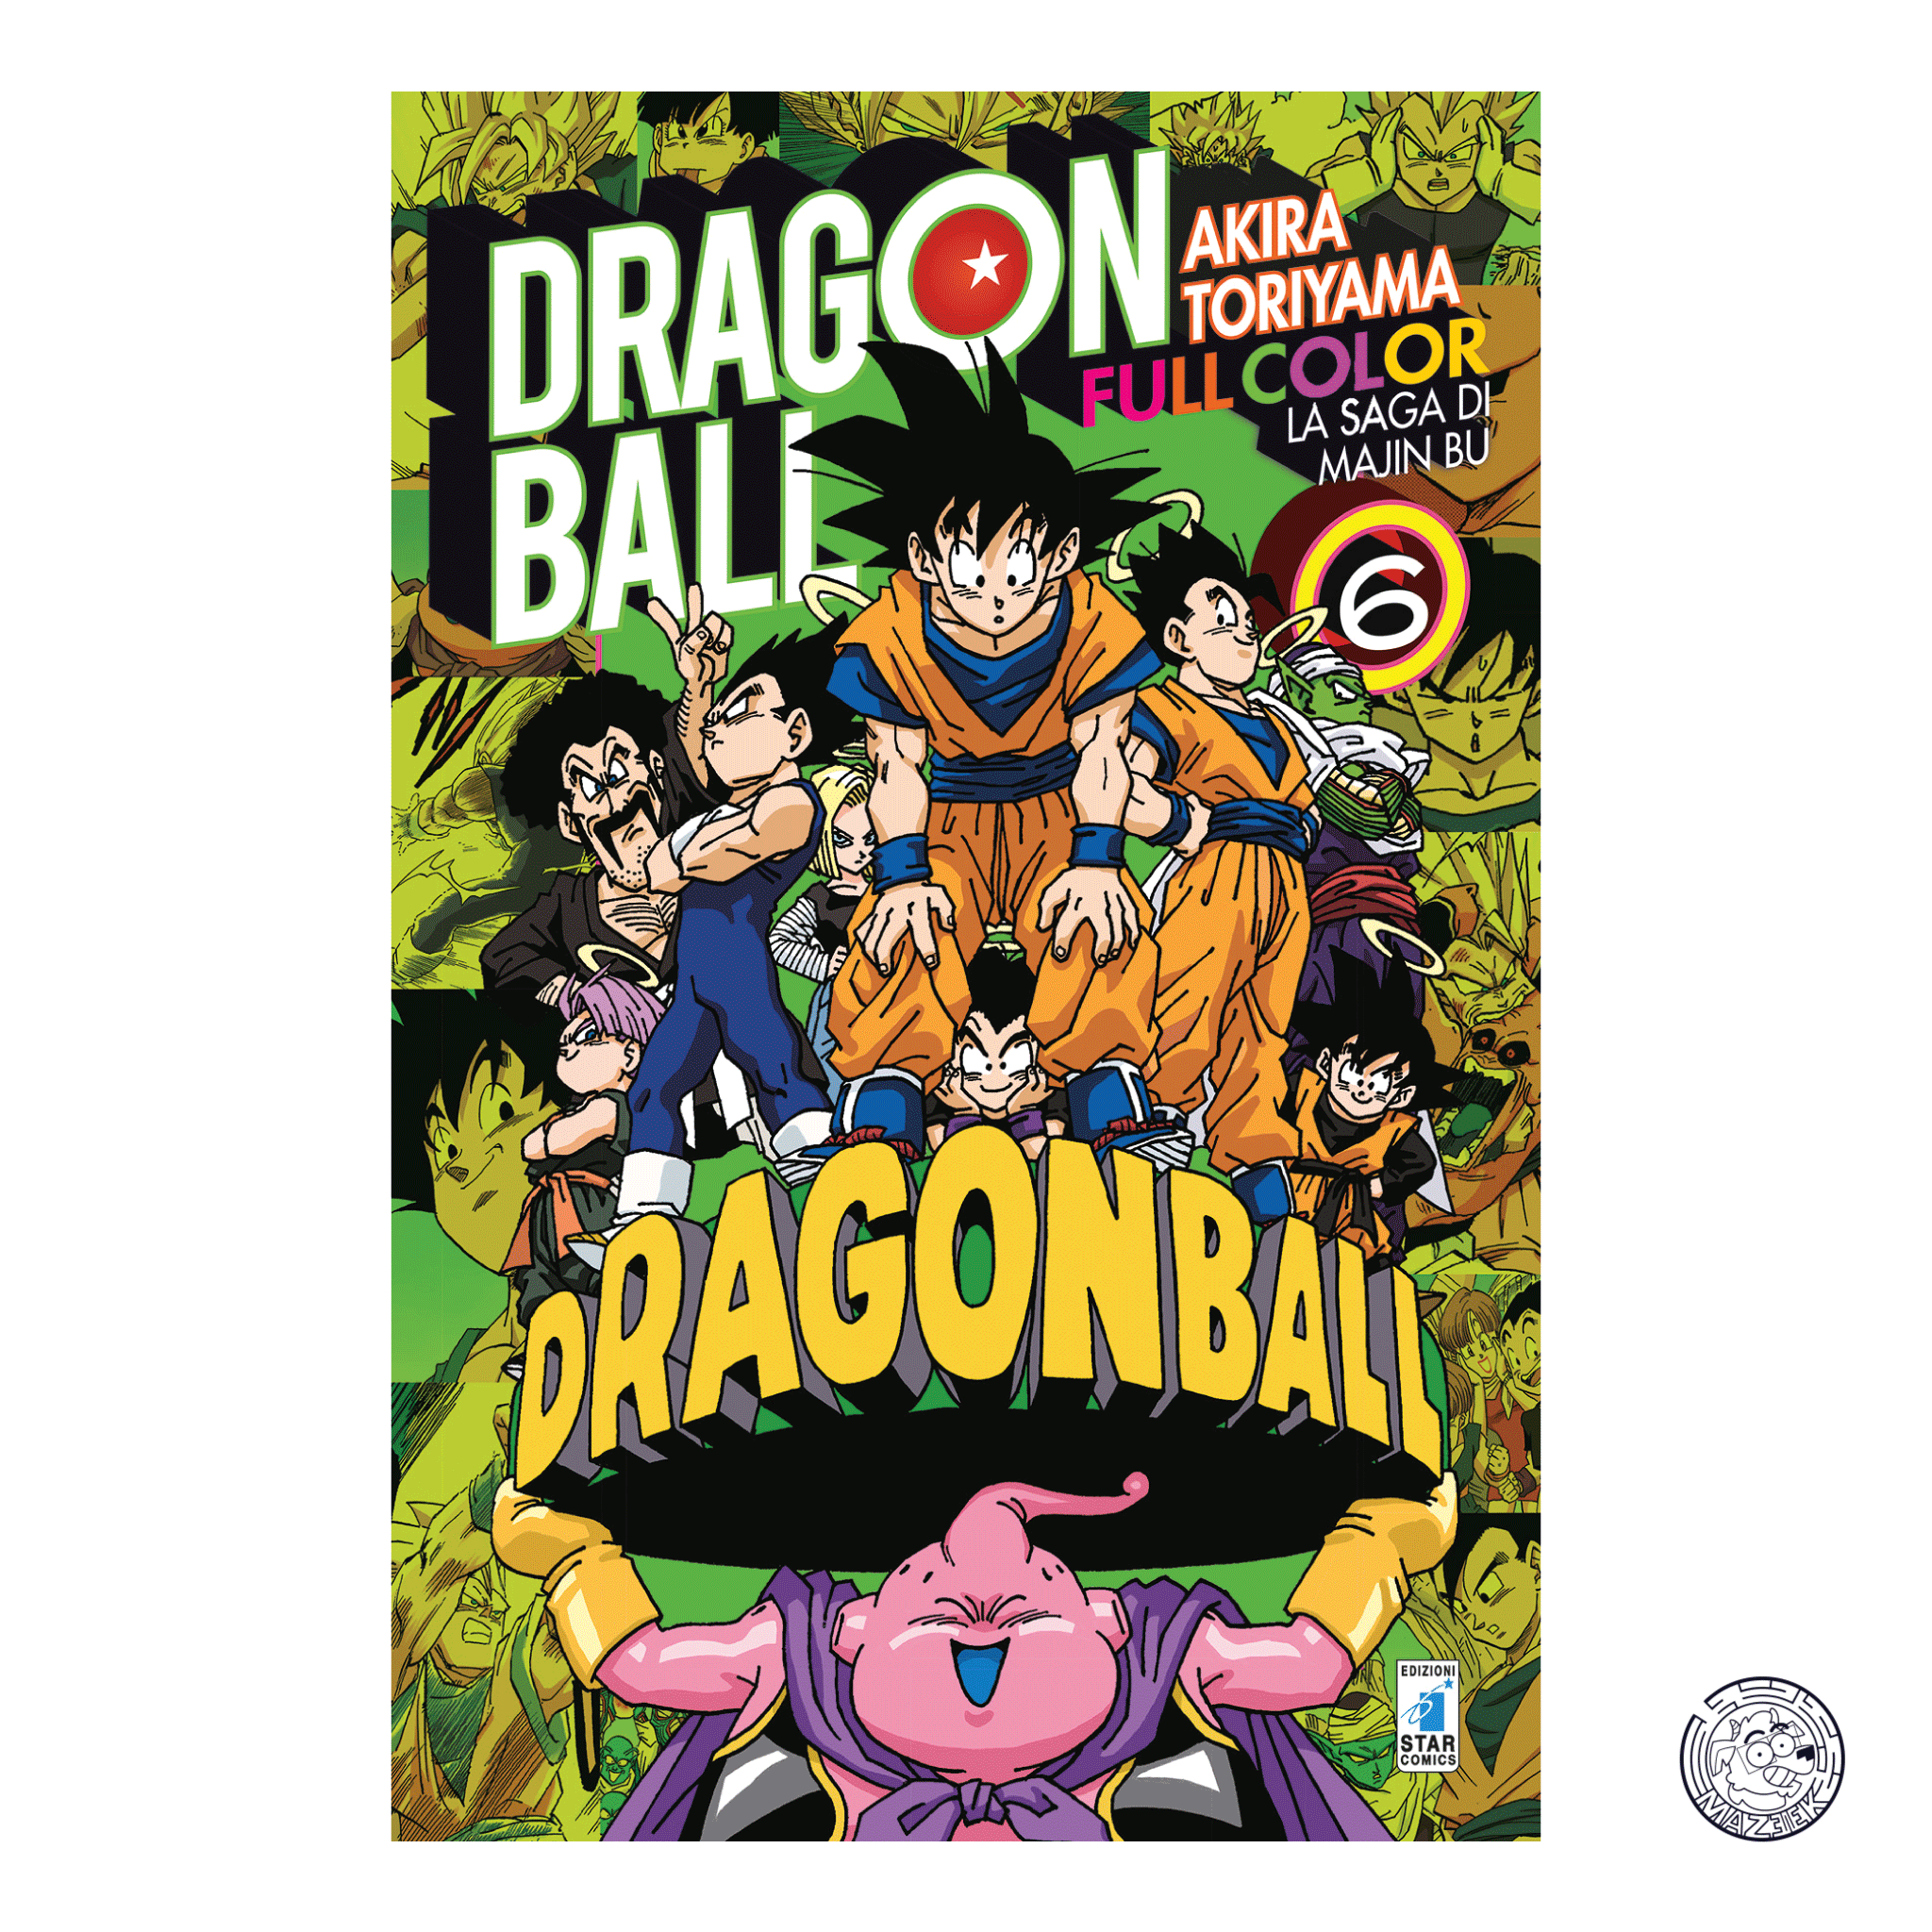 Dragon Ball Full Color 31: La Saga di Majin Bu 6